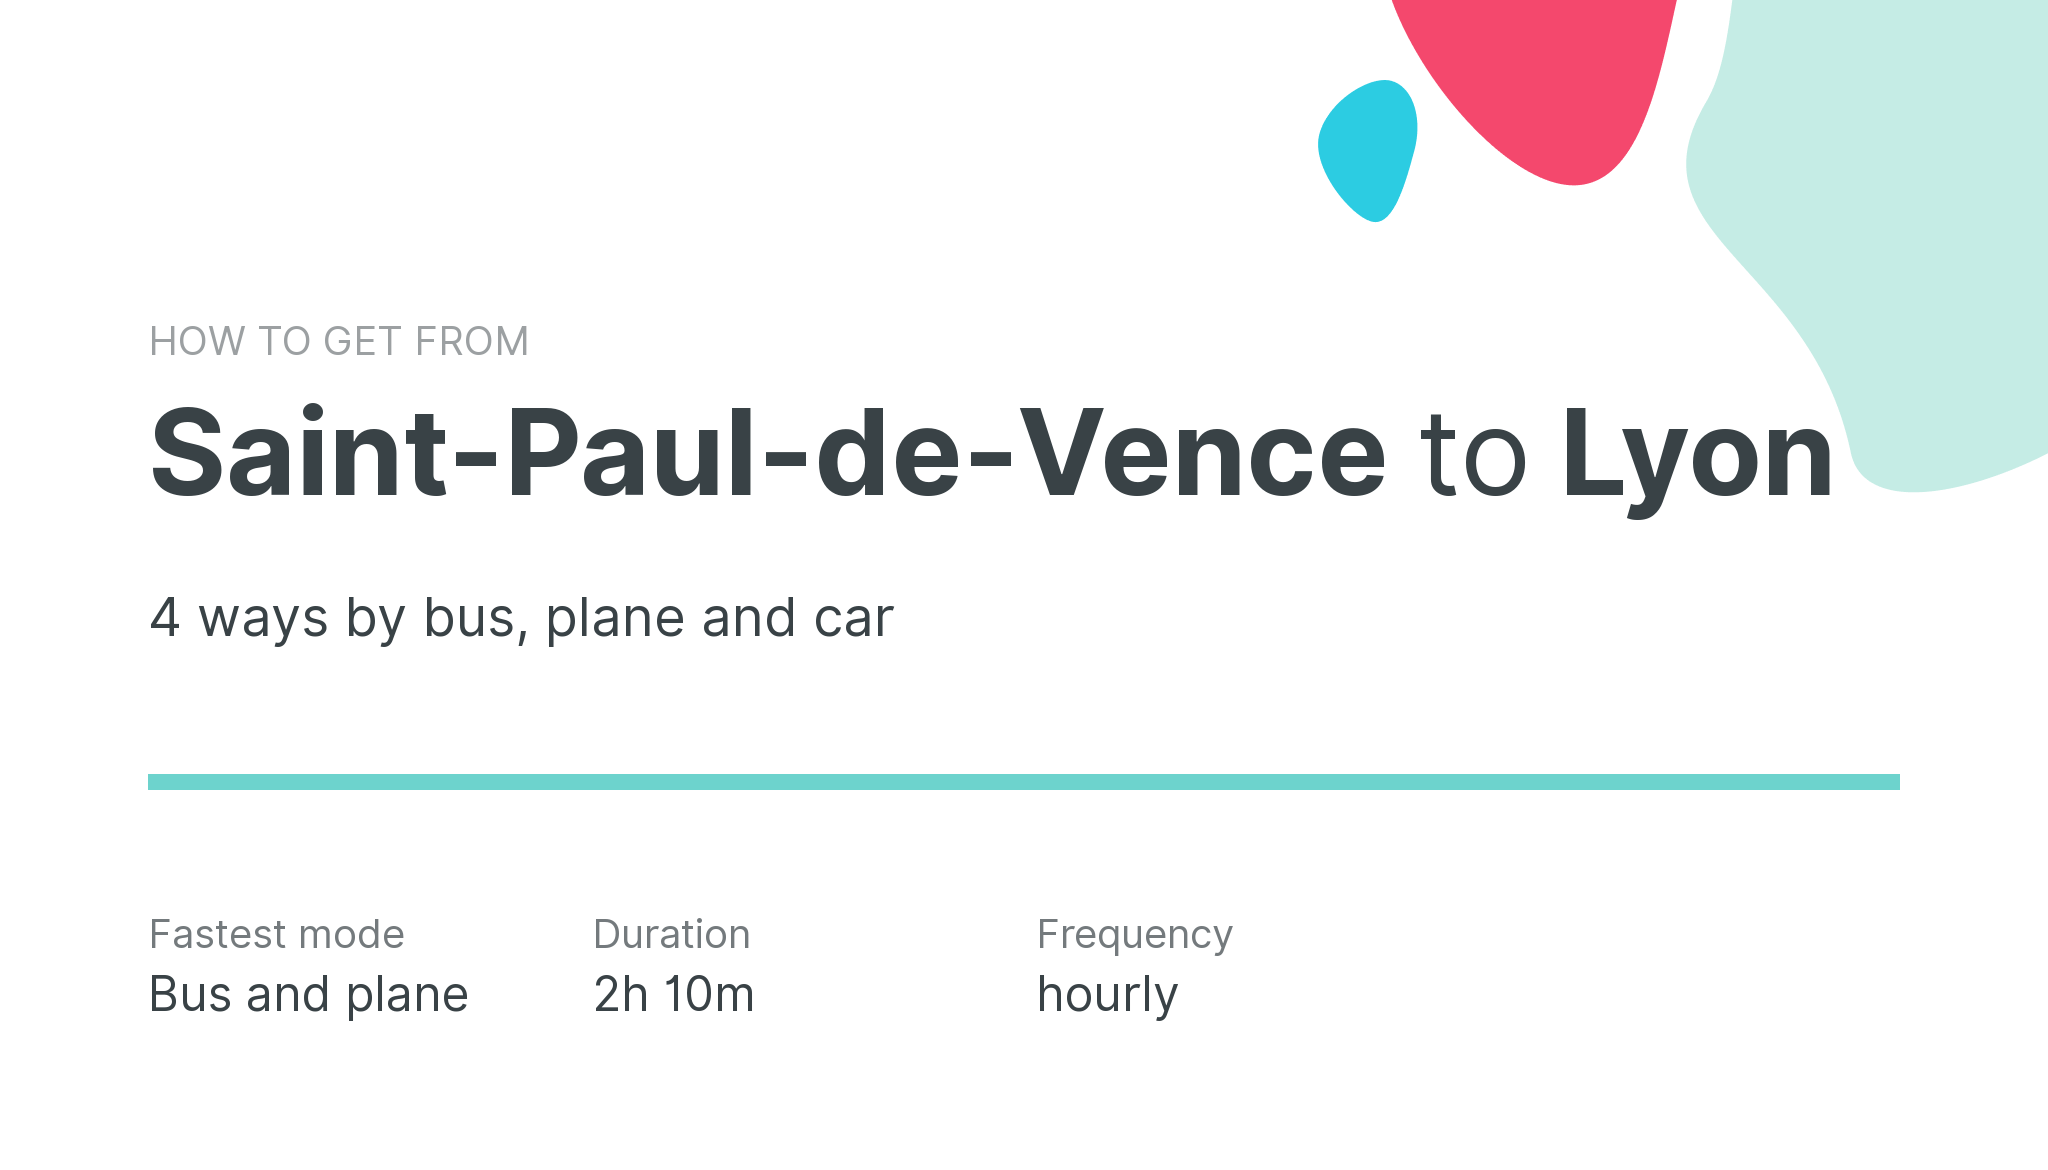 How do I get from Saint-Paul-de-Vence to Lyon